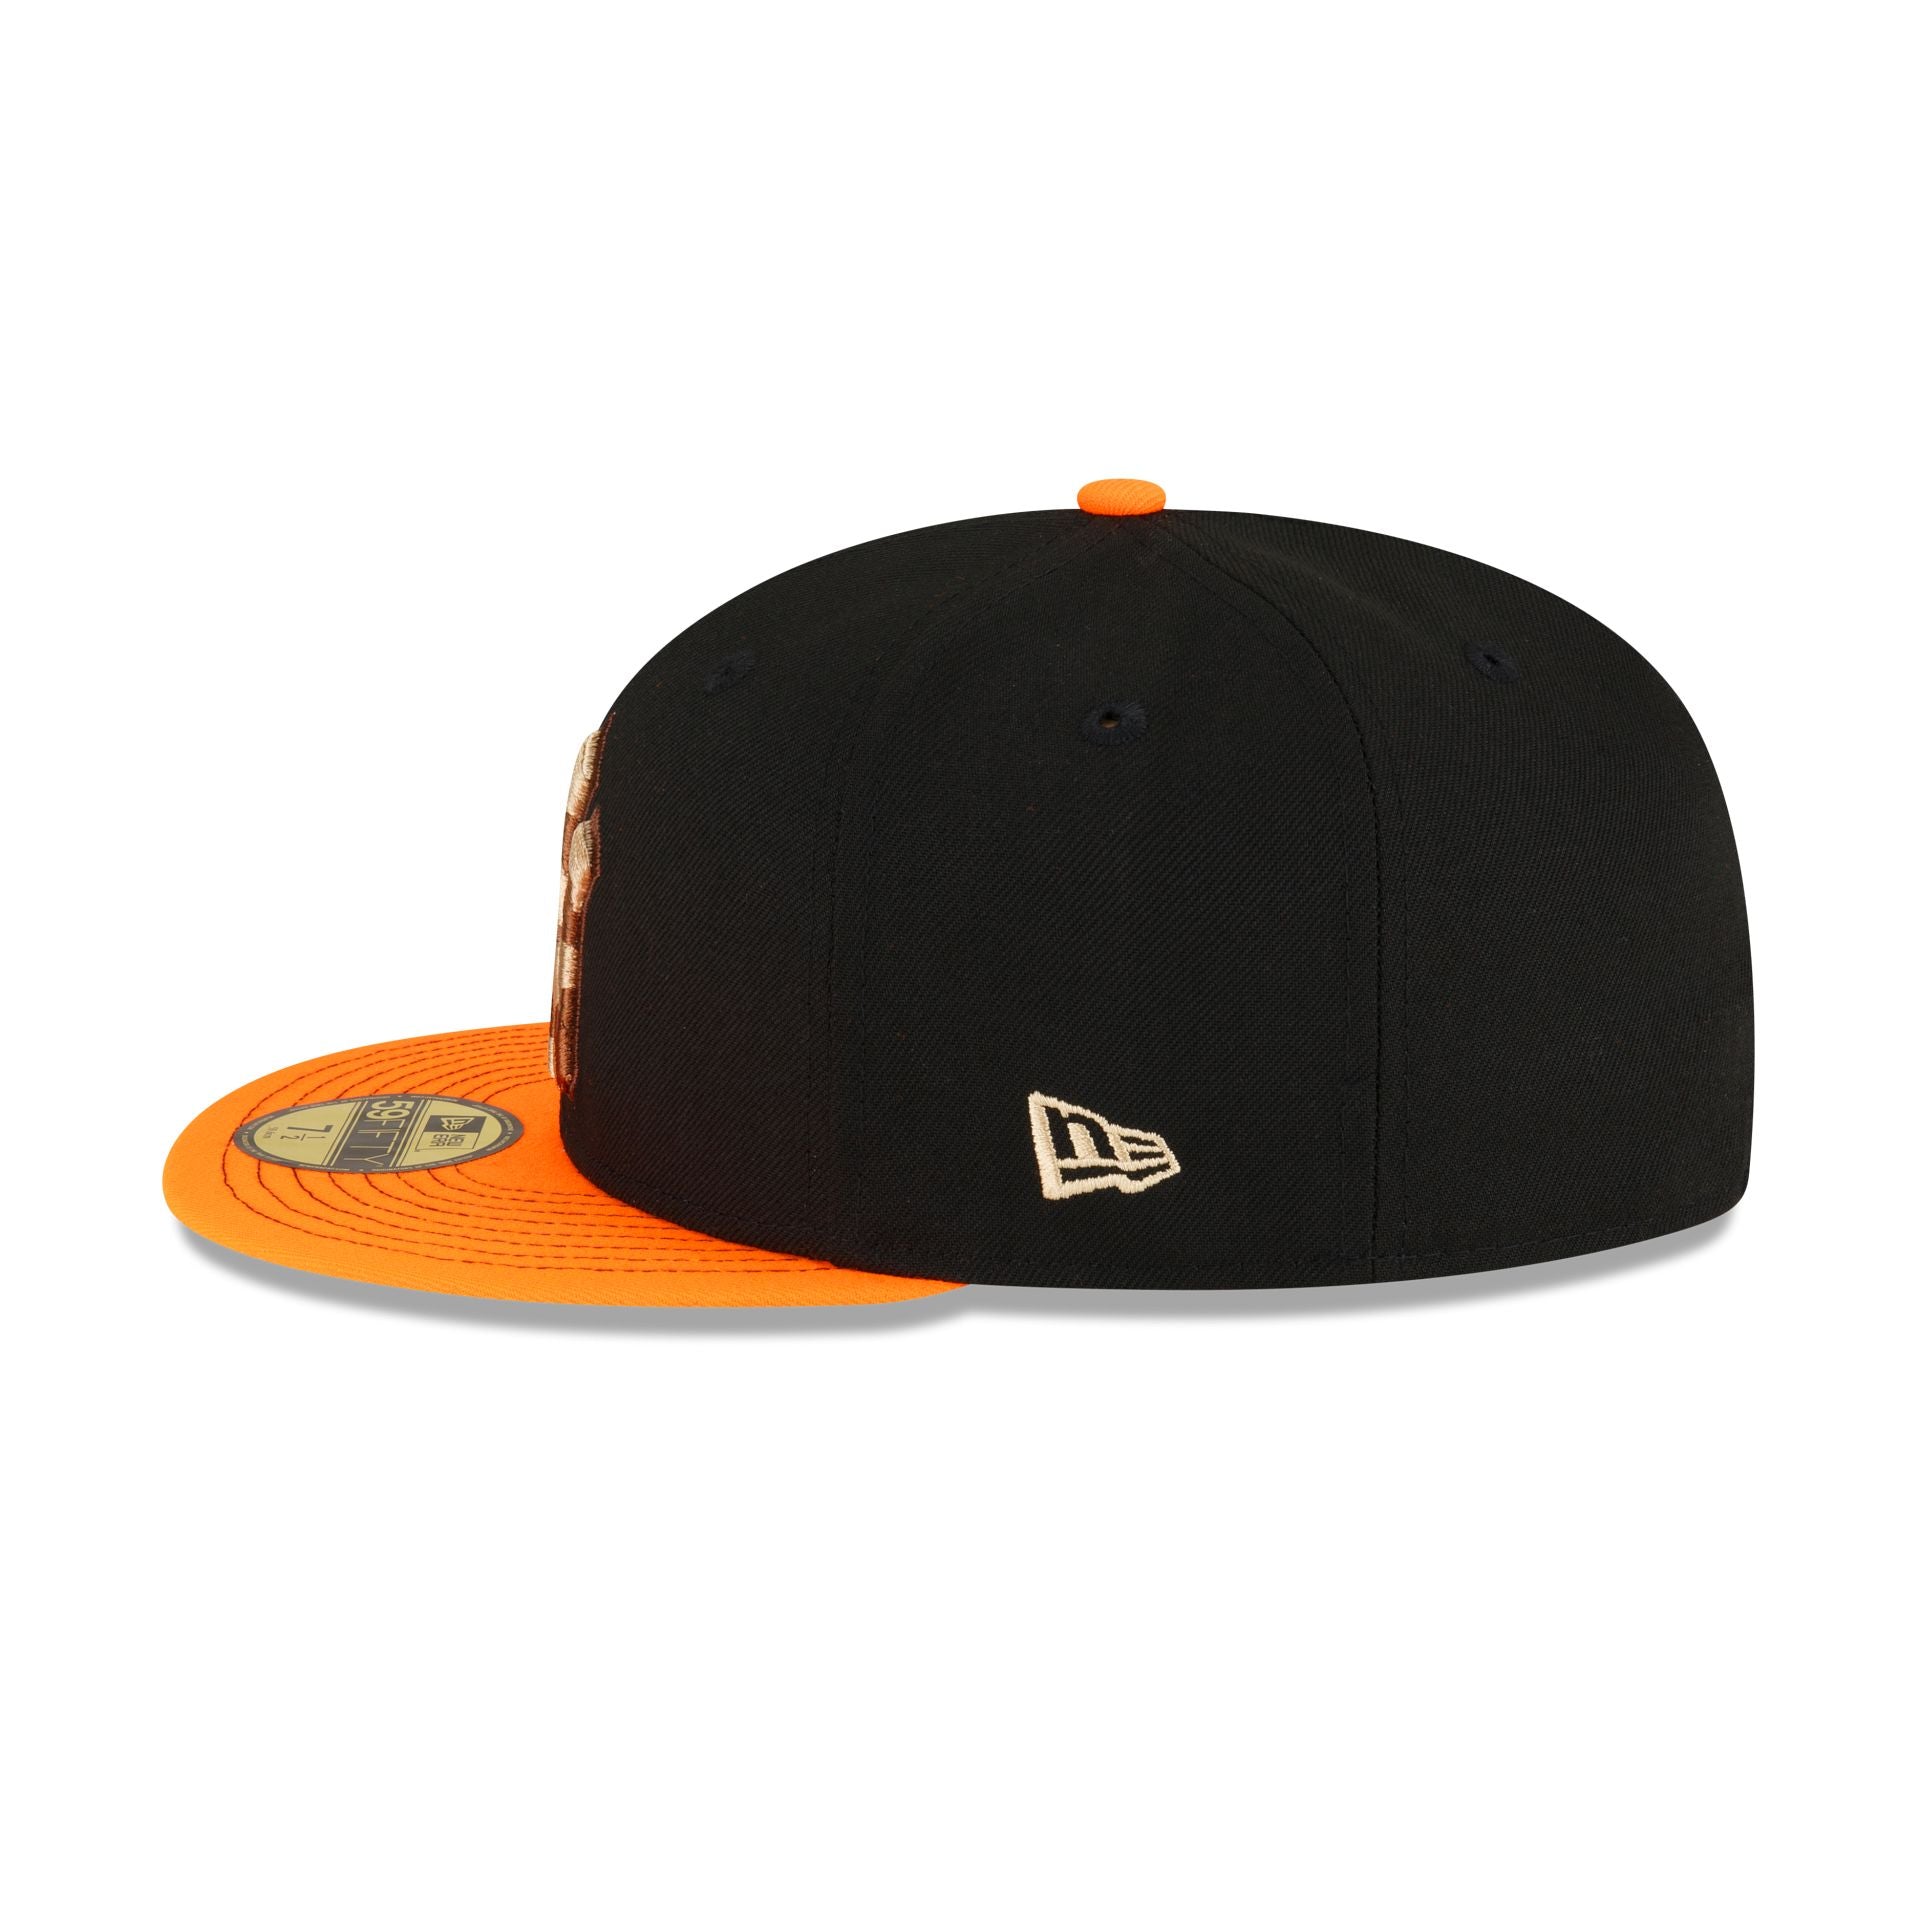 Just Caps Orange New – Yankees Visor Era Cap 59FIFTY Fitted York Hat New